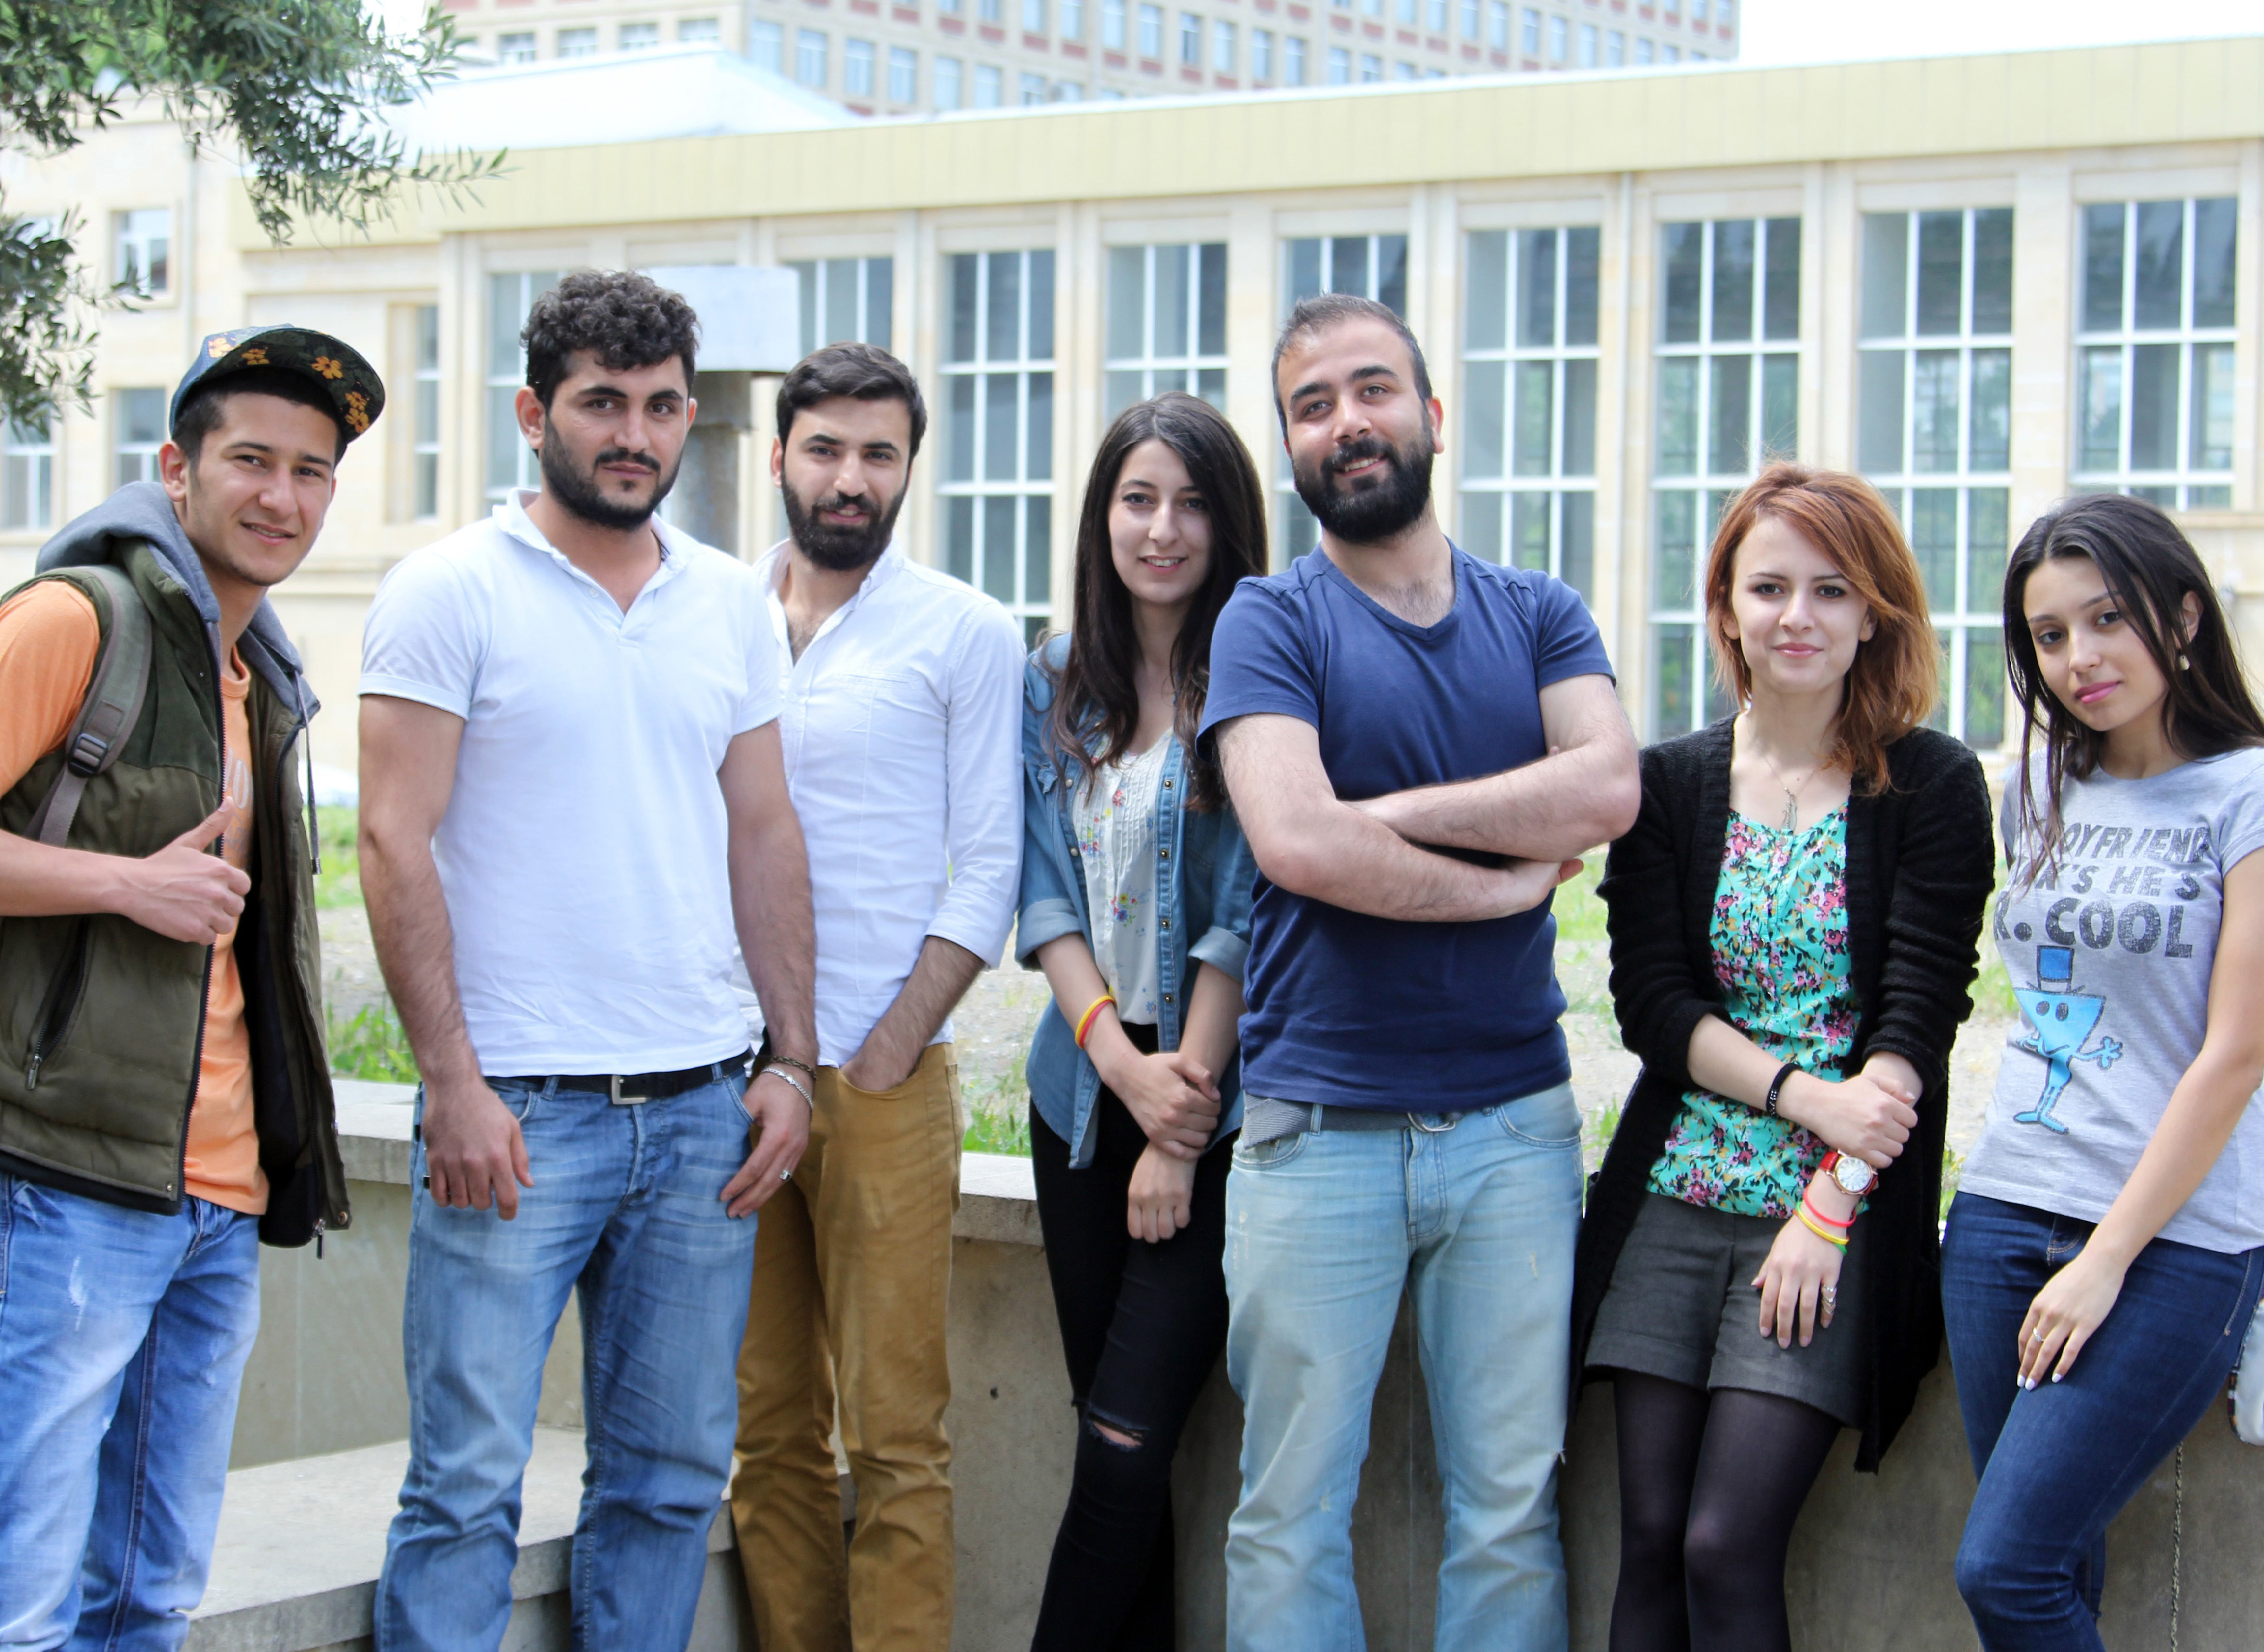 Baku 2015 volunteers - helping to make Games happen